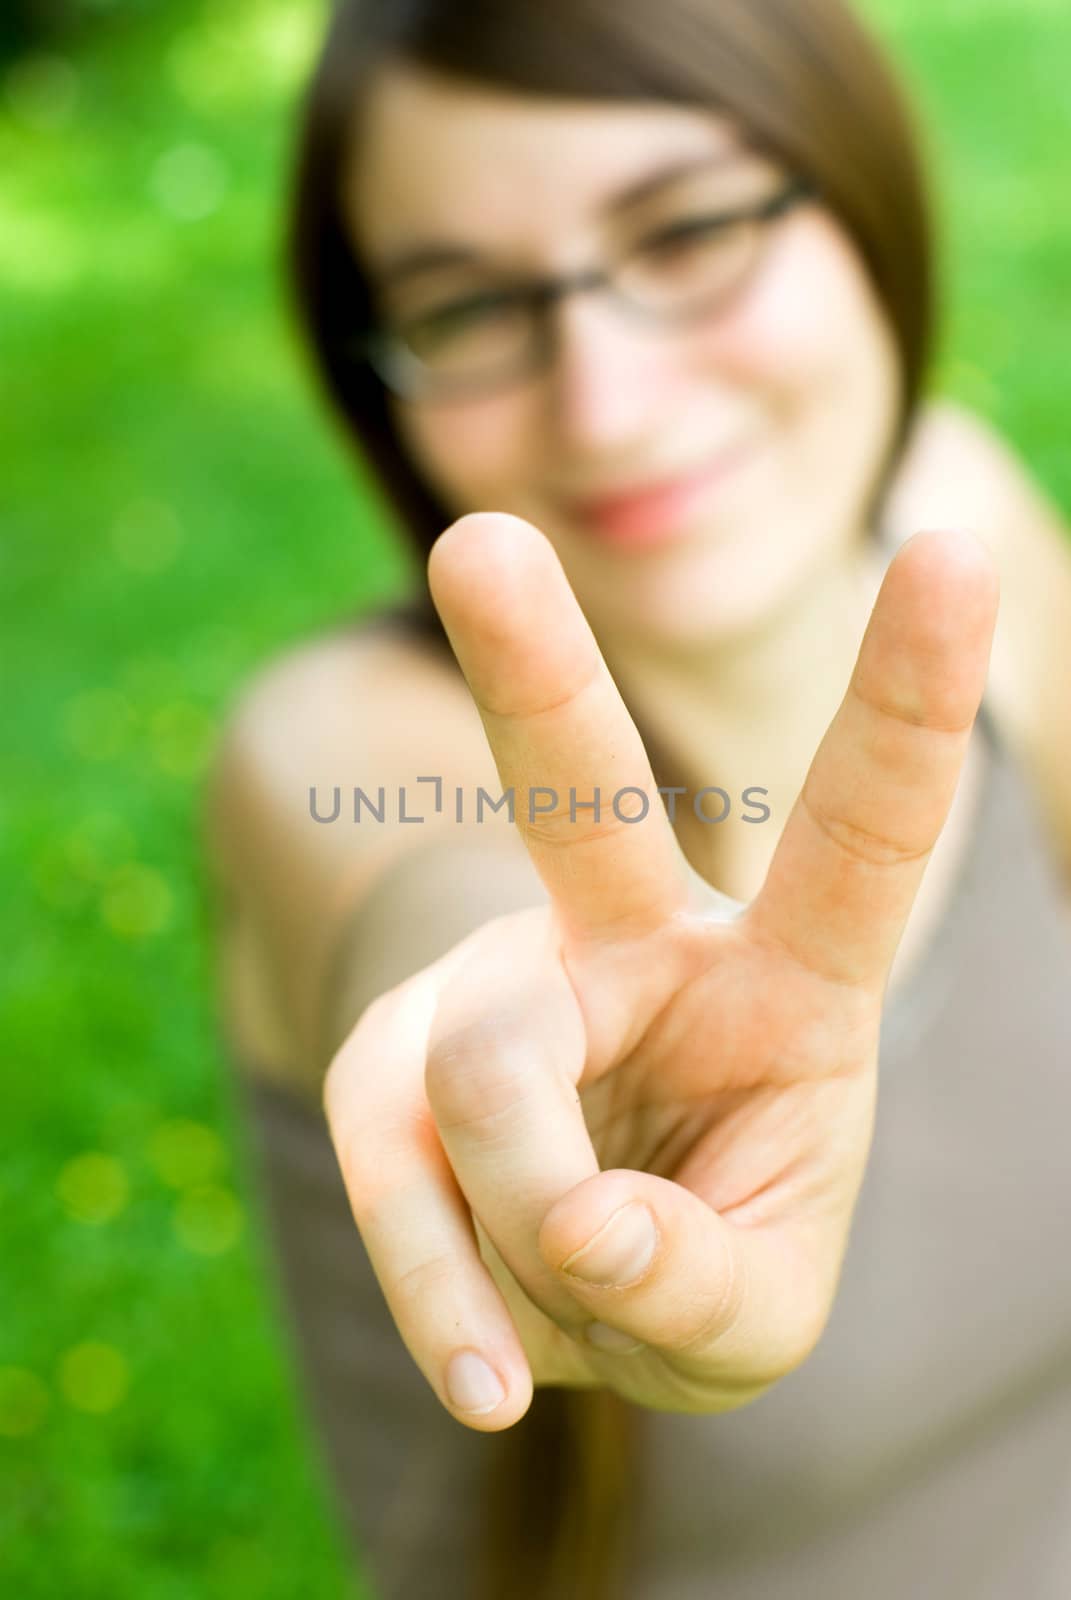 smiling girl making victory gesture by filmstroem